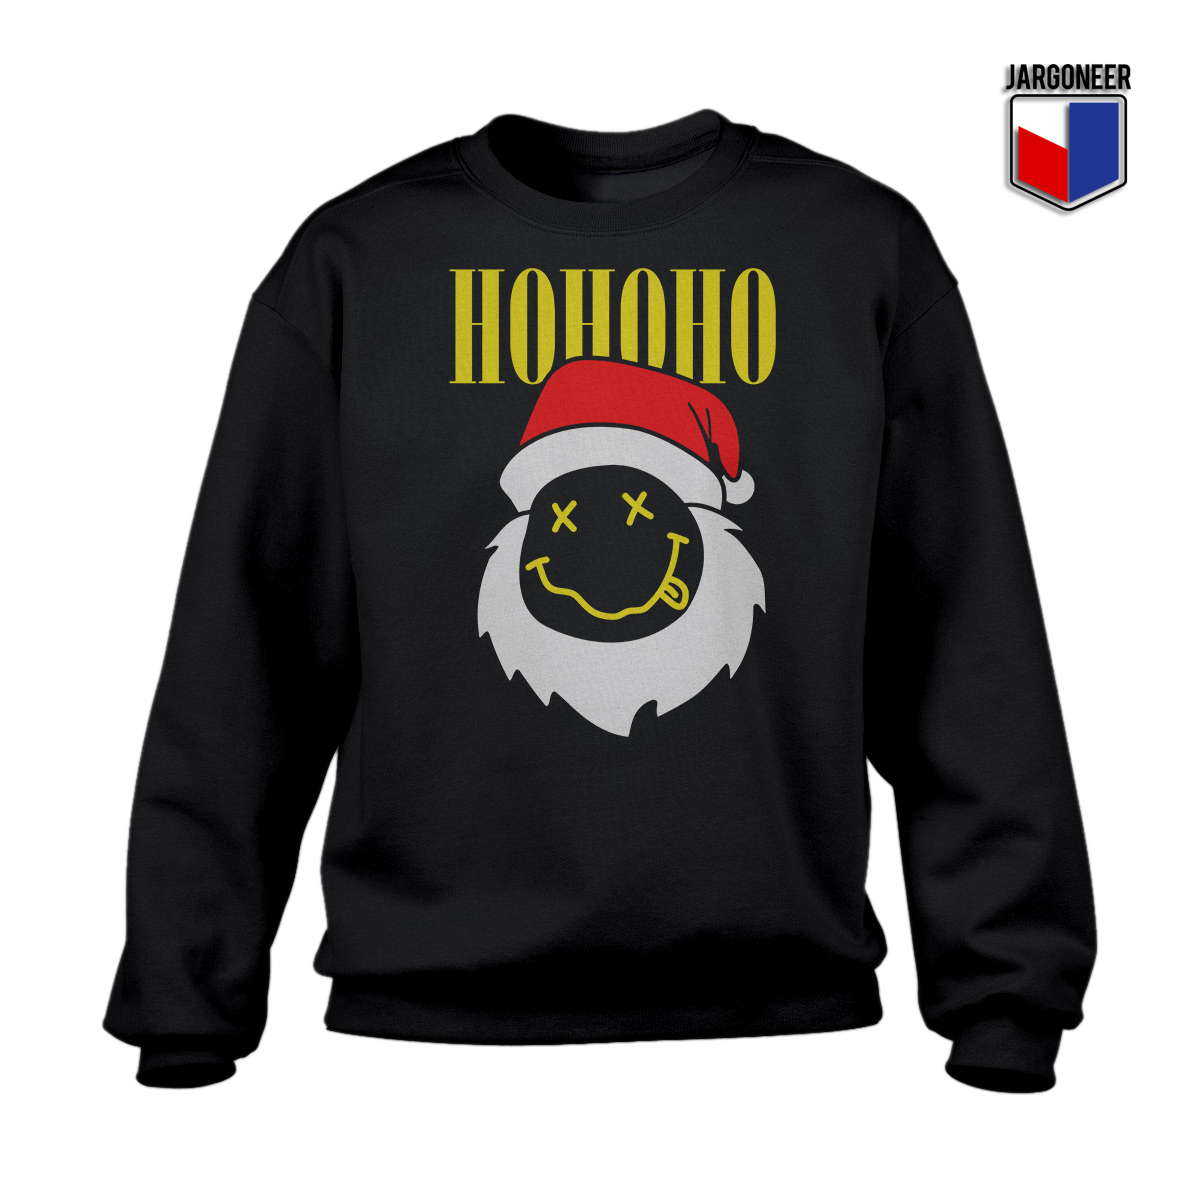 Smell Like North Pole Spirit Black SS - Shop Unique Graphic Cool Shirt Designs